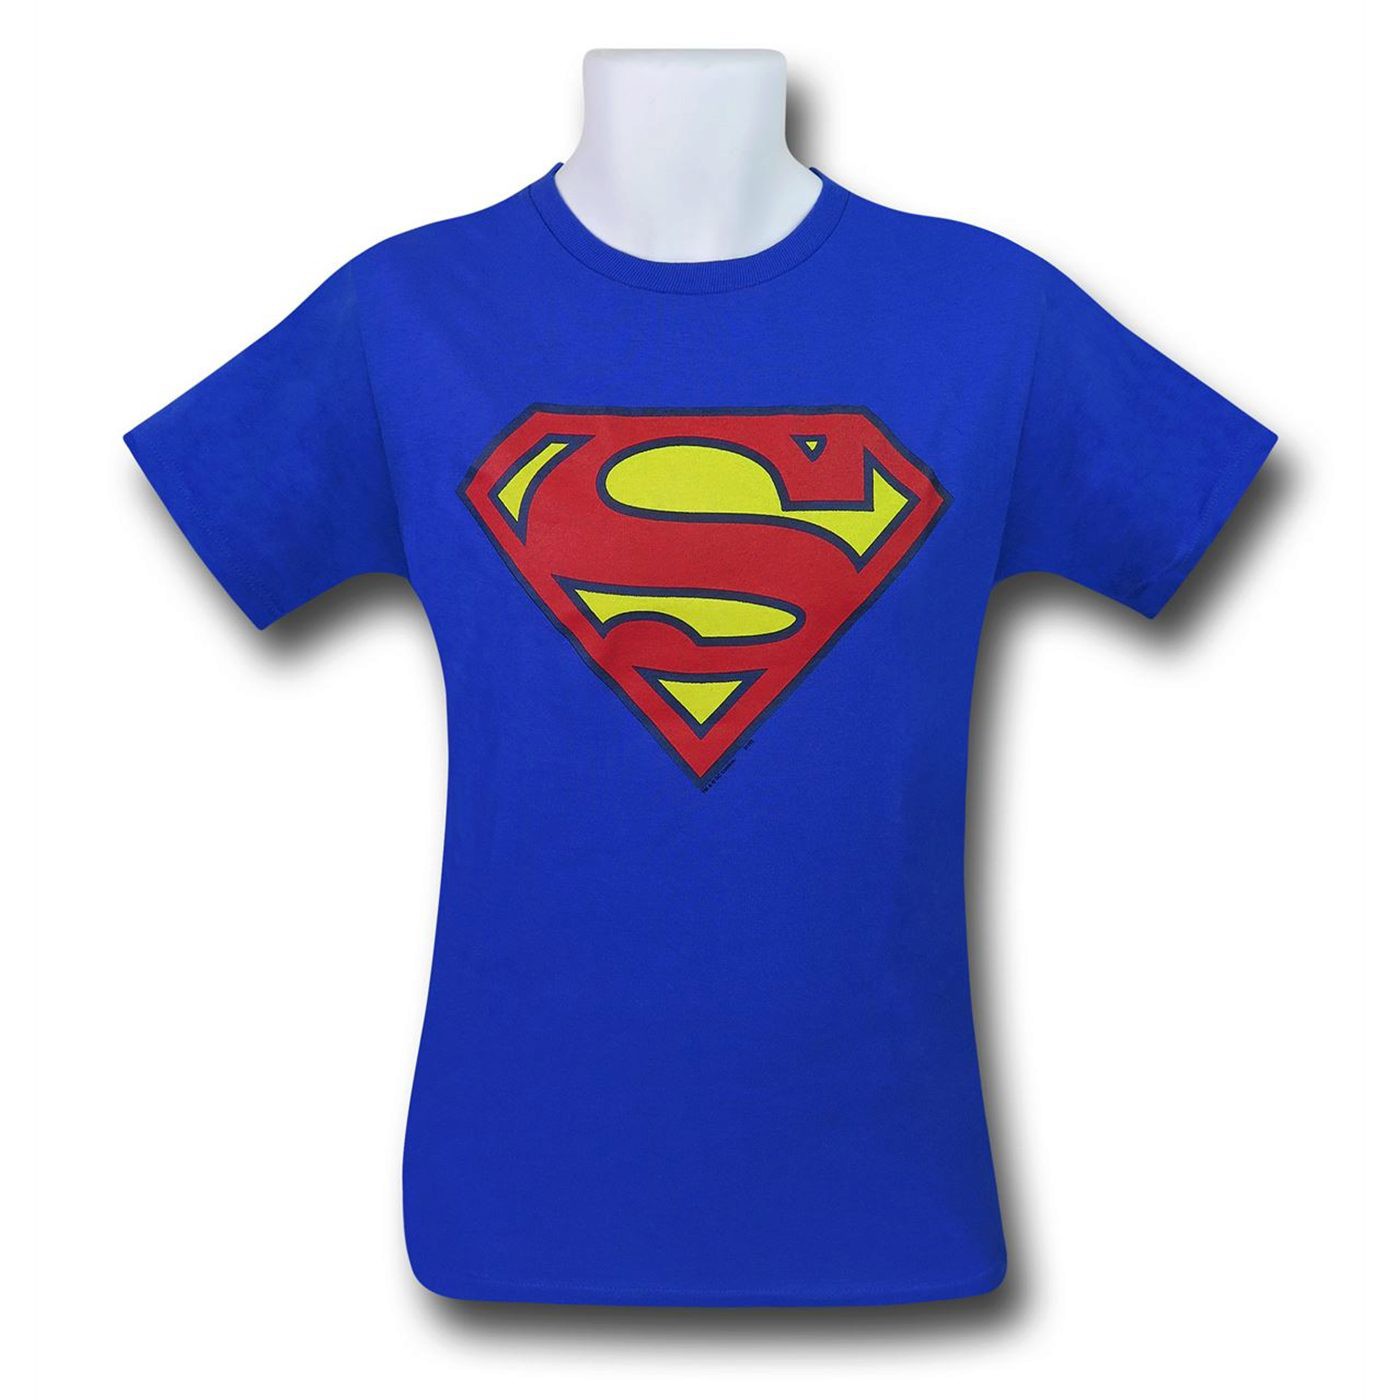 Superman Kids Royal Blue Symbol T-Shirt